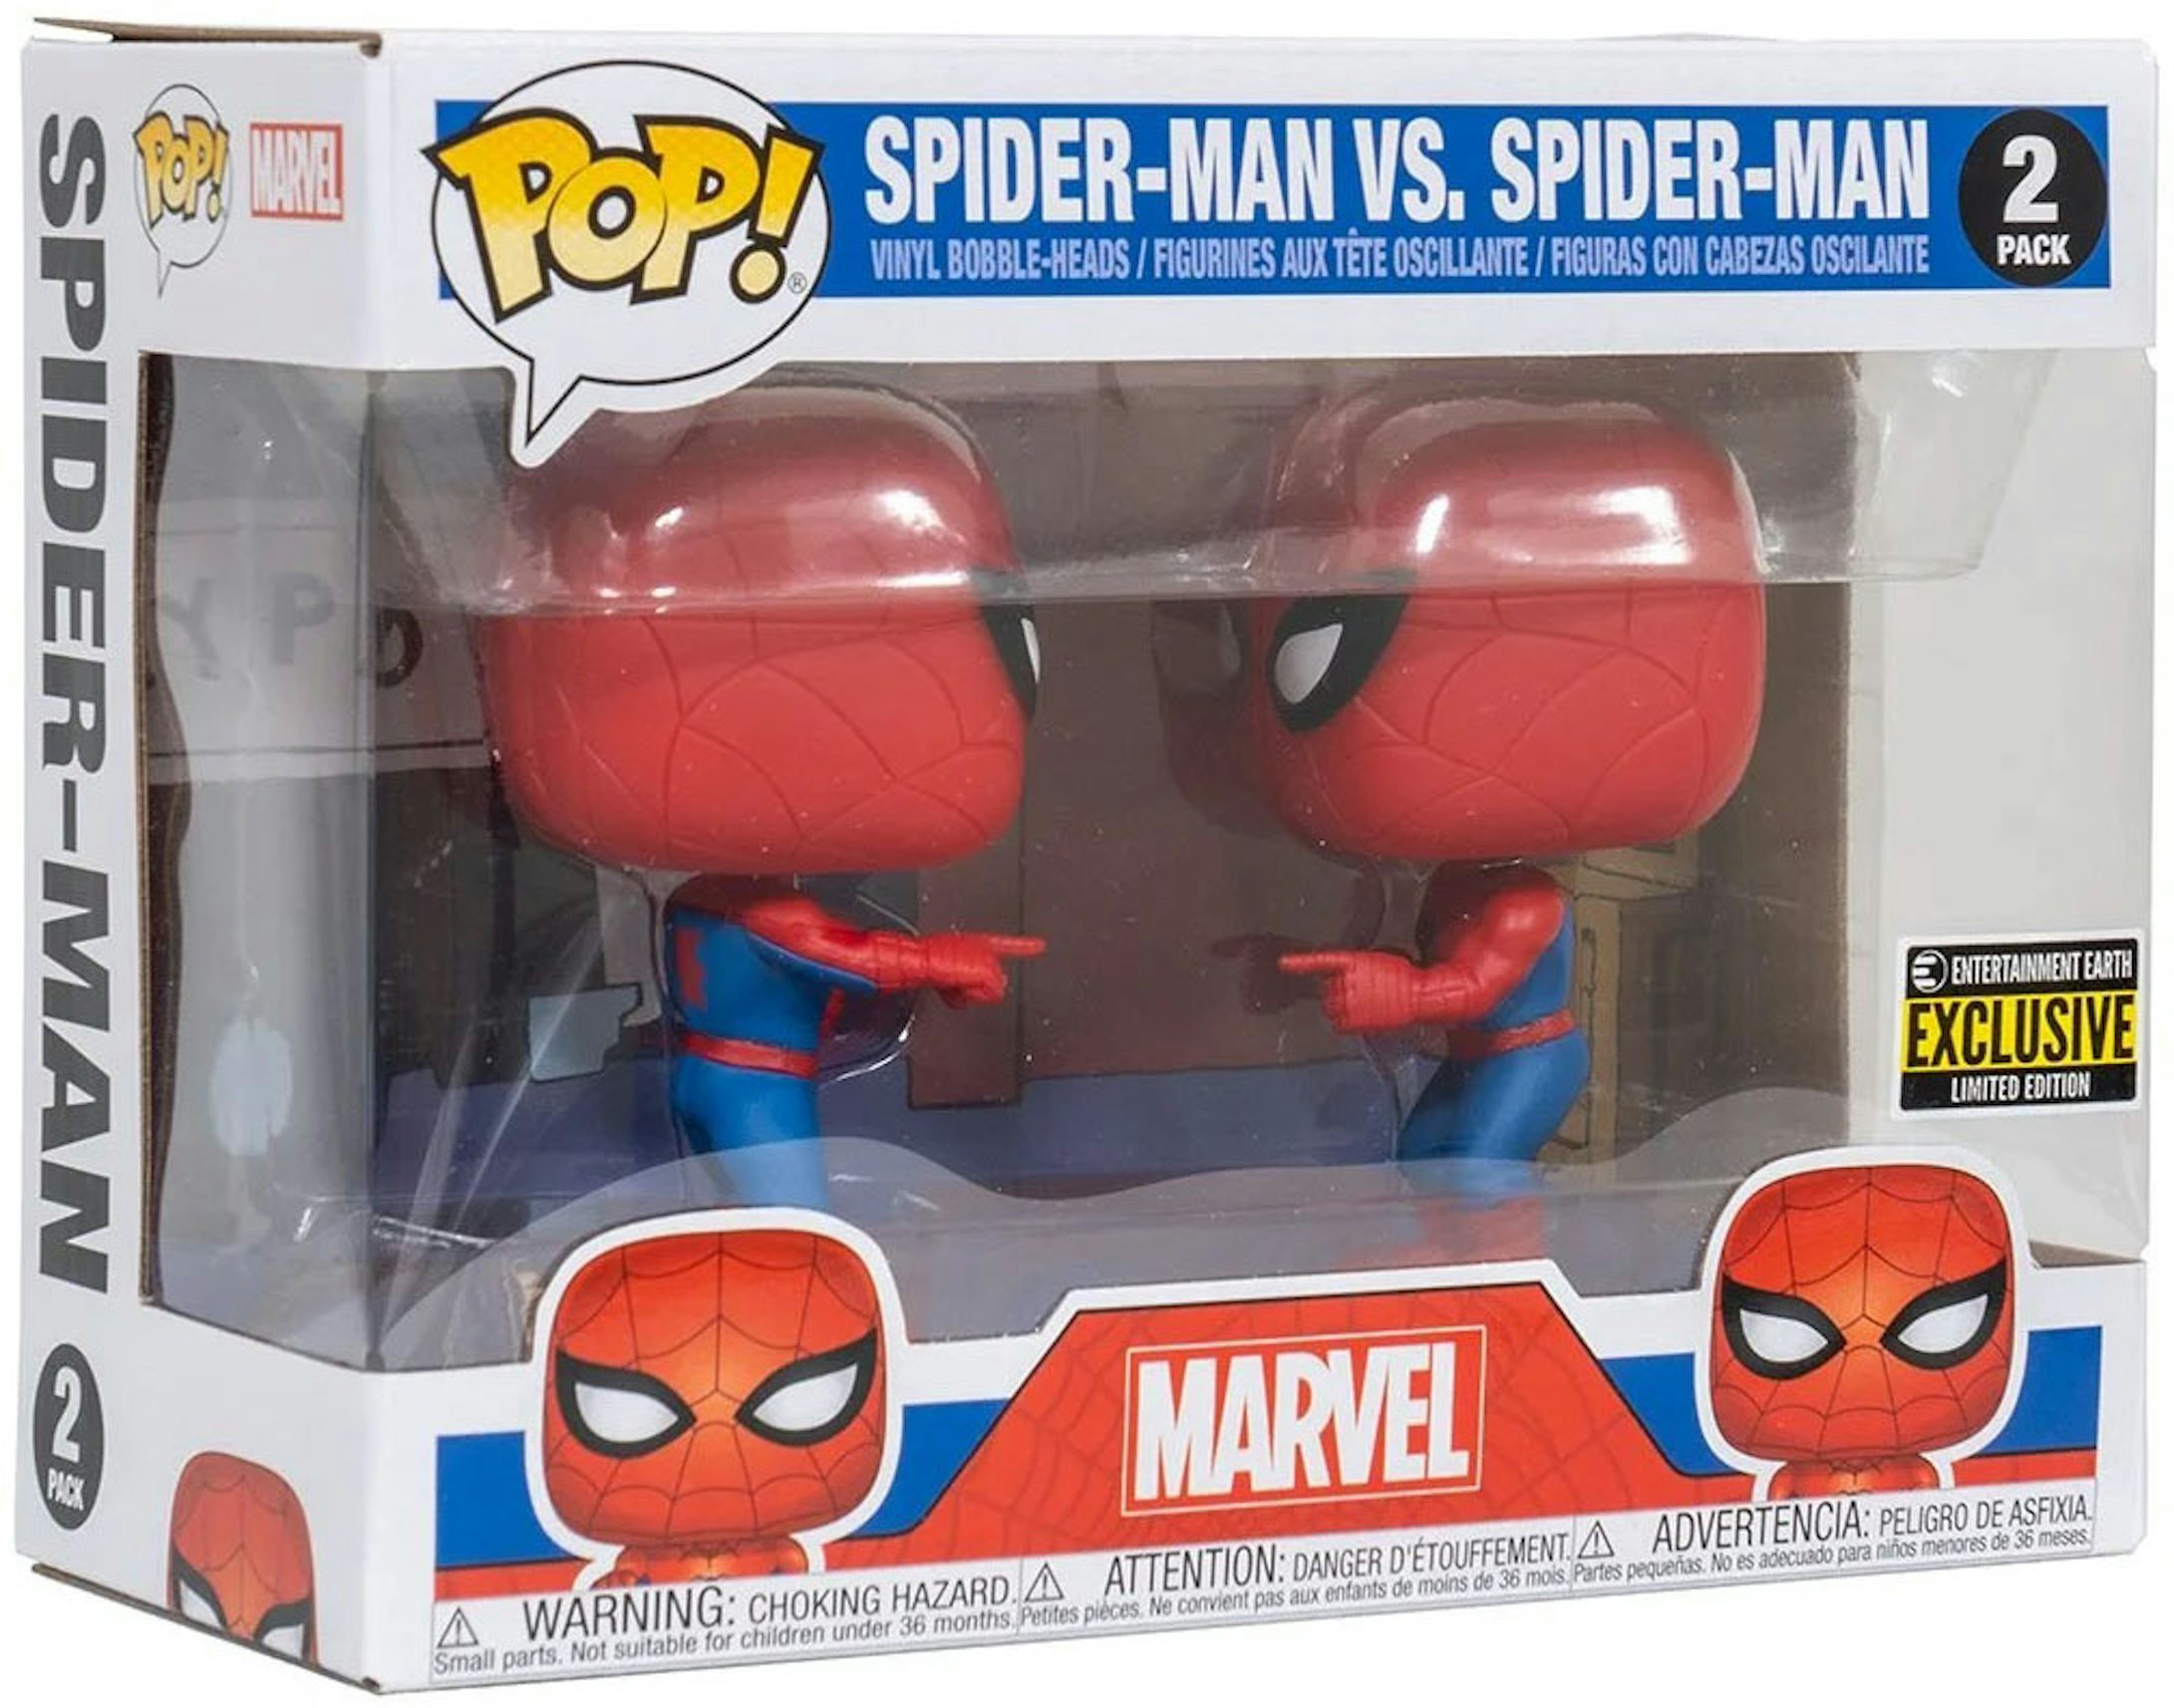 Funko Pop! Marvel: Spider-Man: No Way Home - 8-pack (Walmart Exclusive)